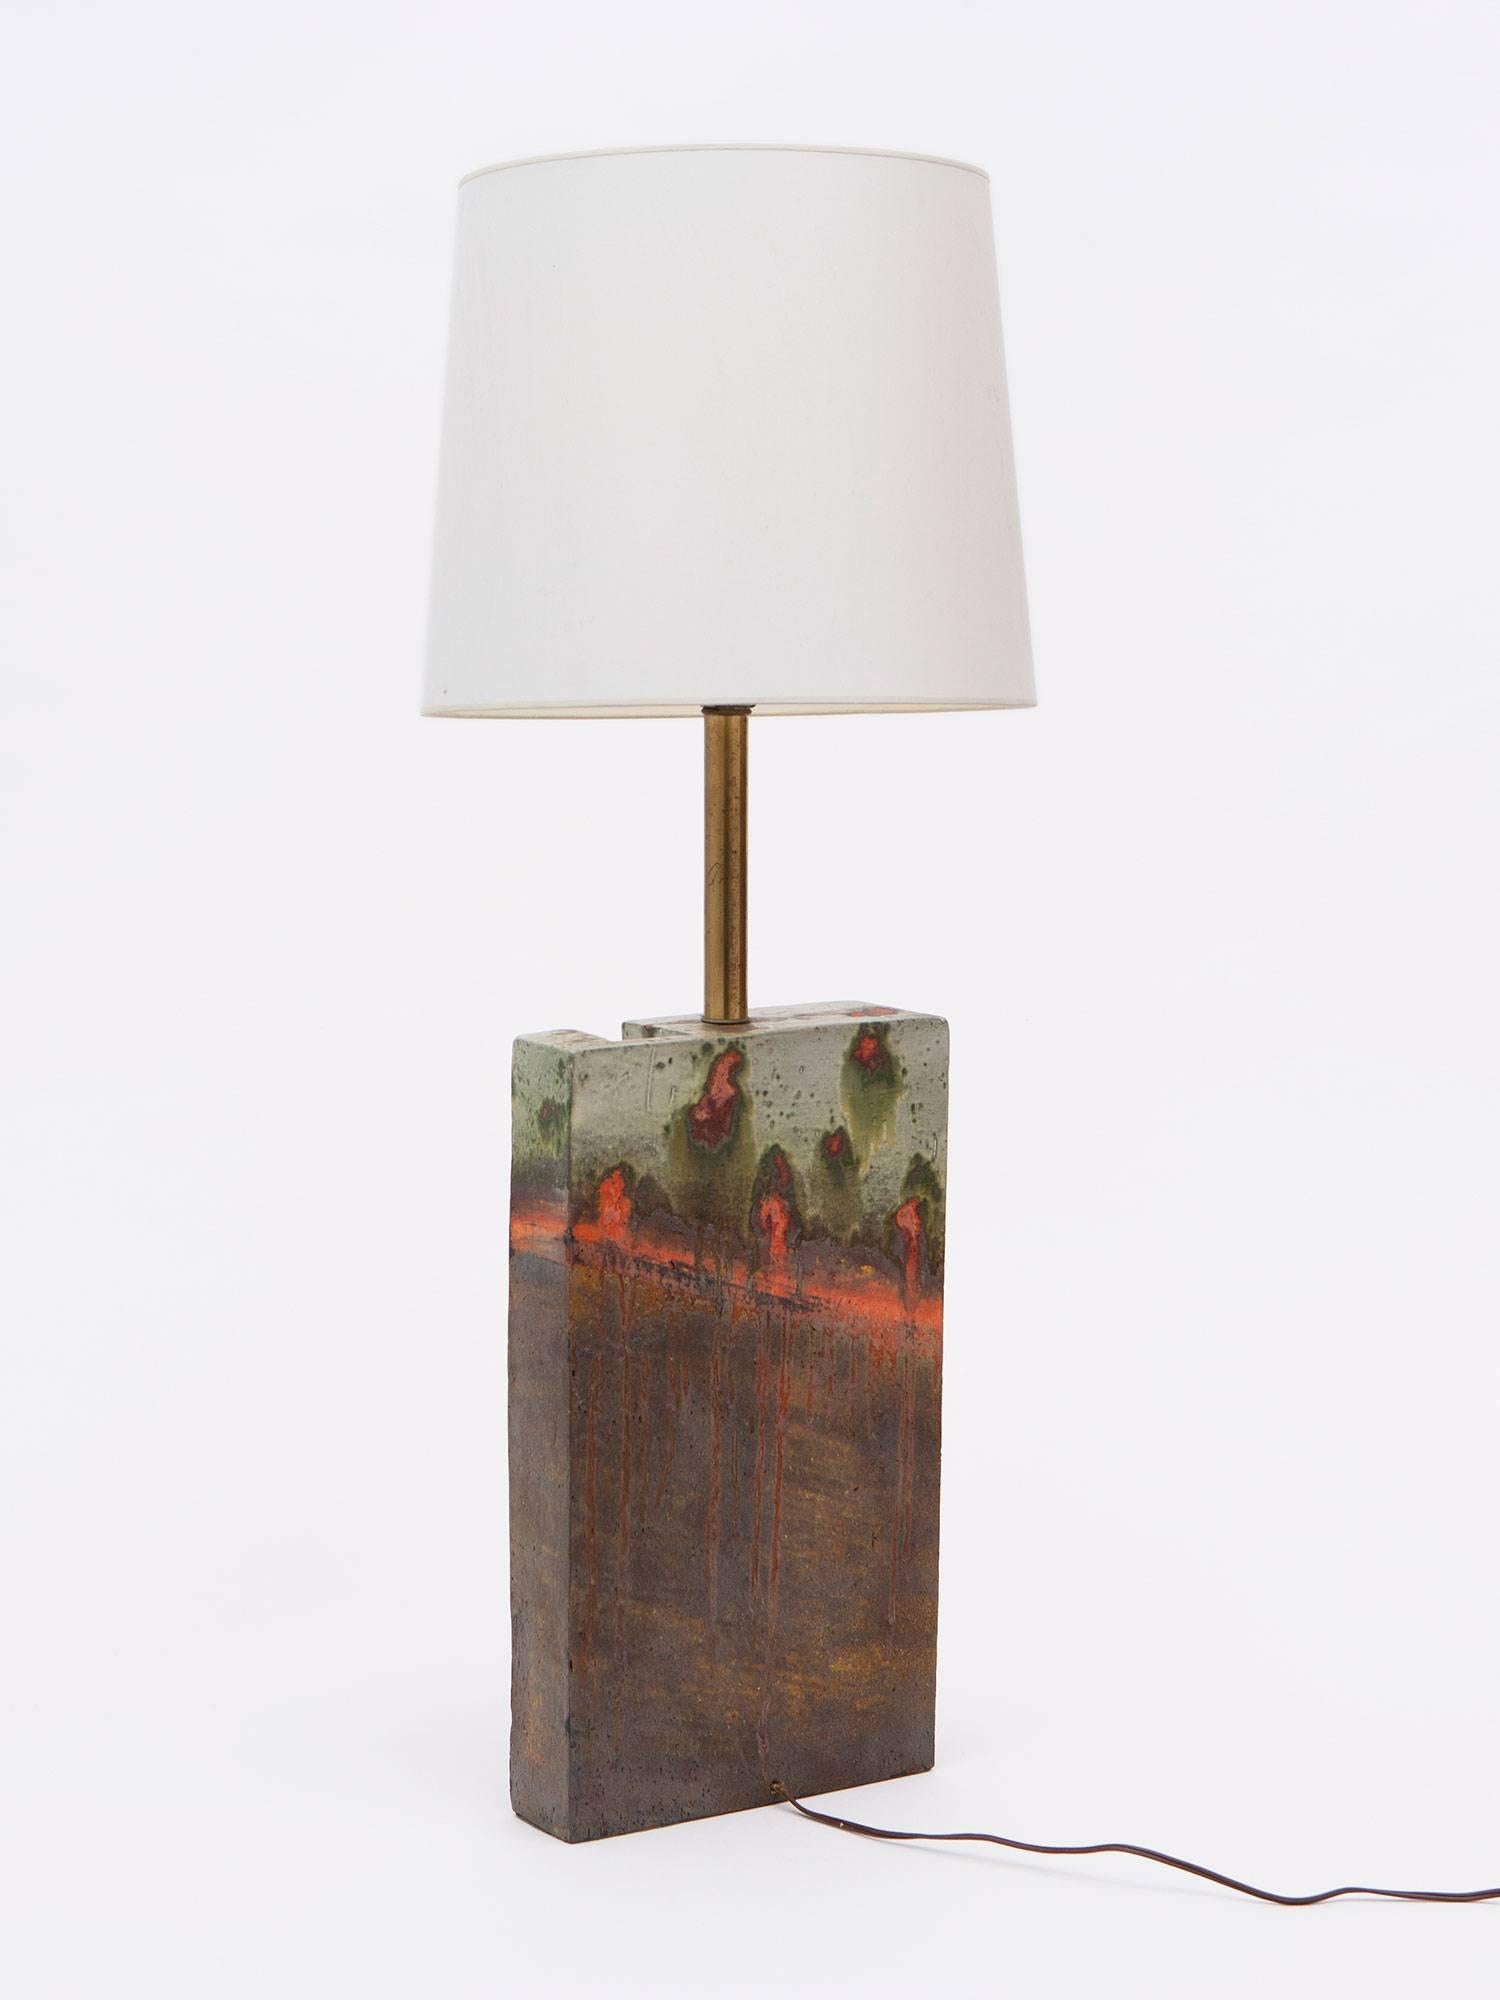 Glazed Marcello Fantoni Ceramic Table Lamp